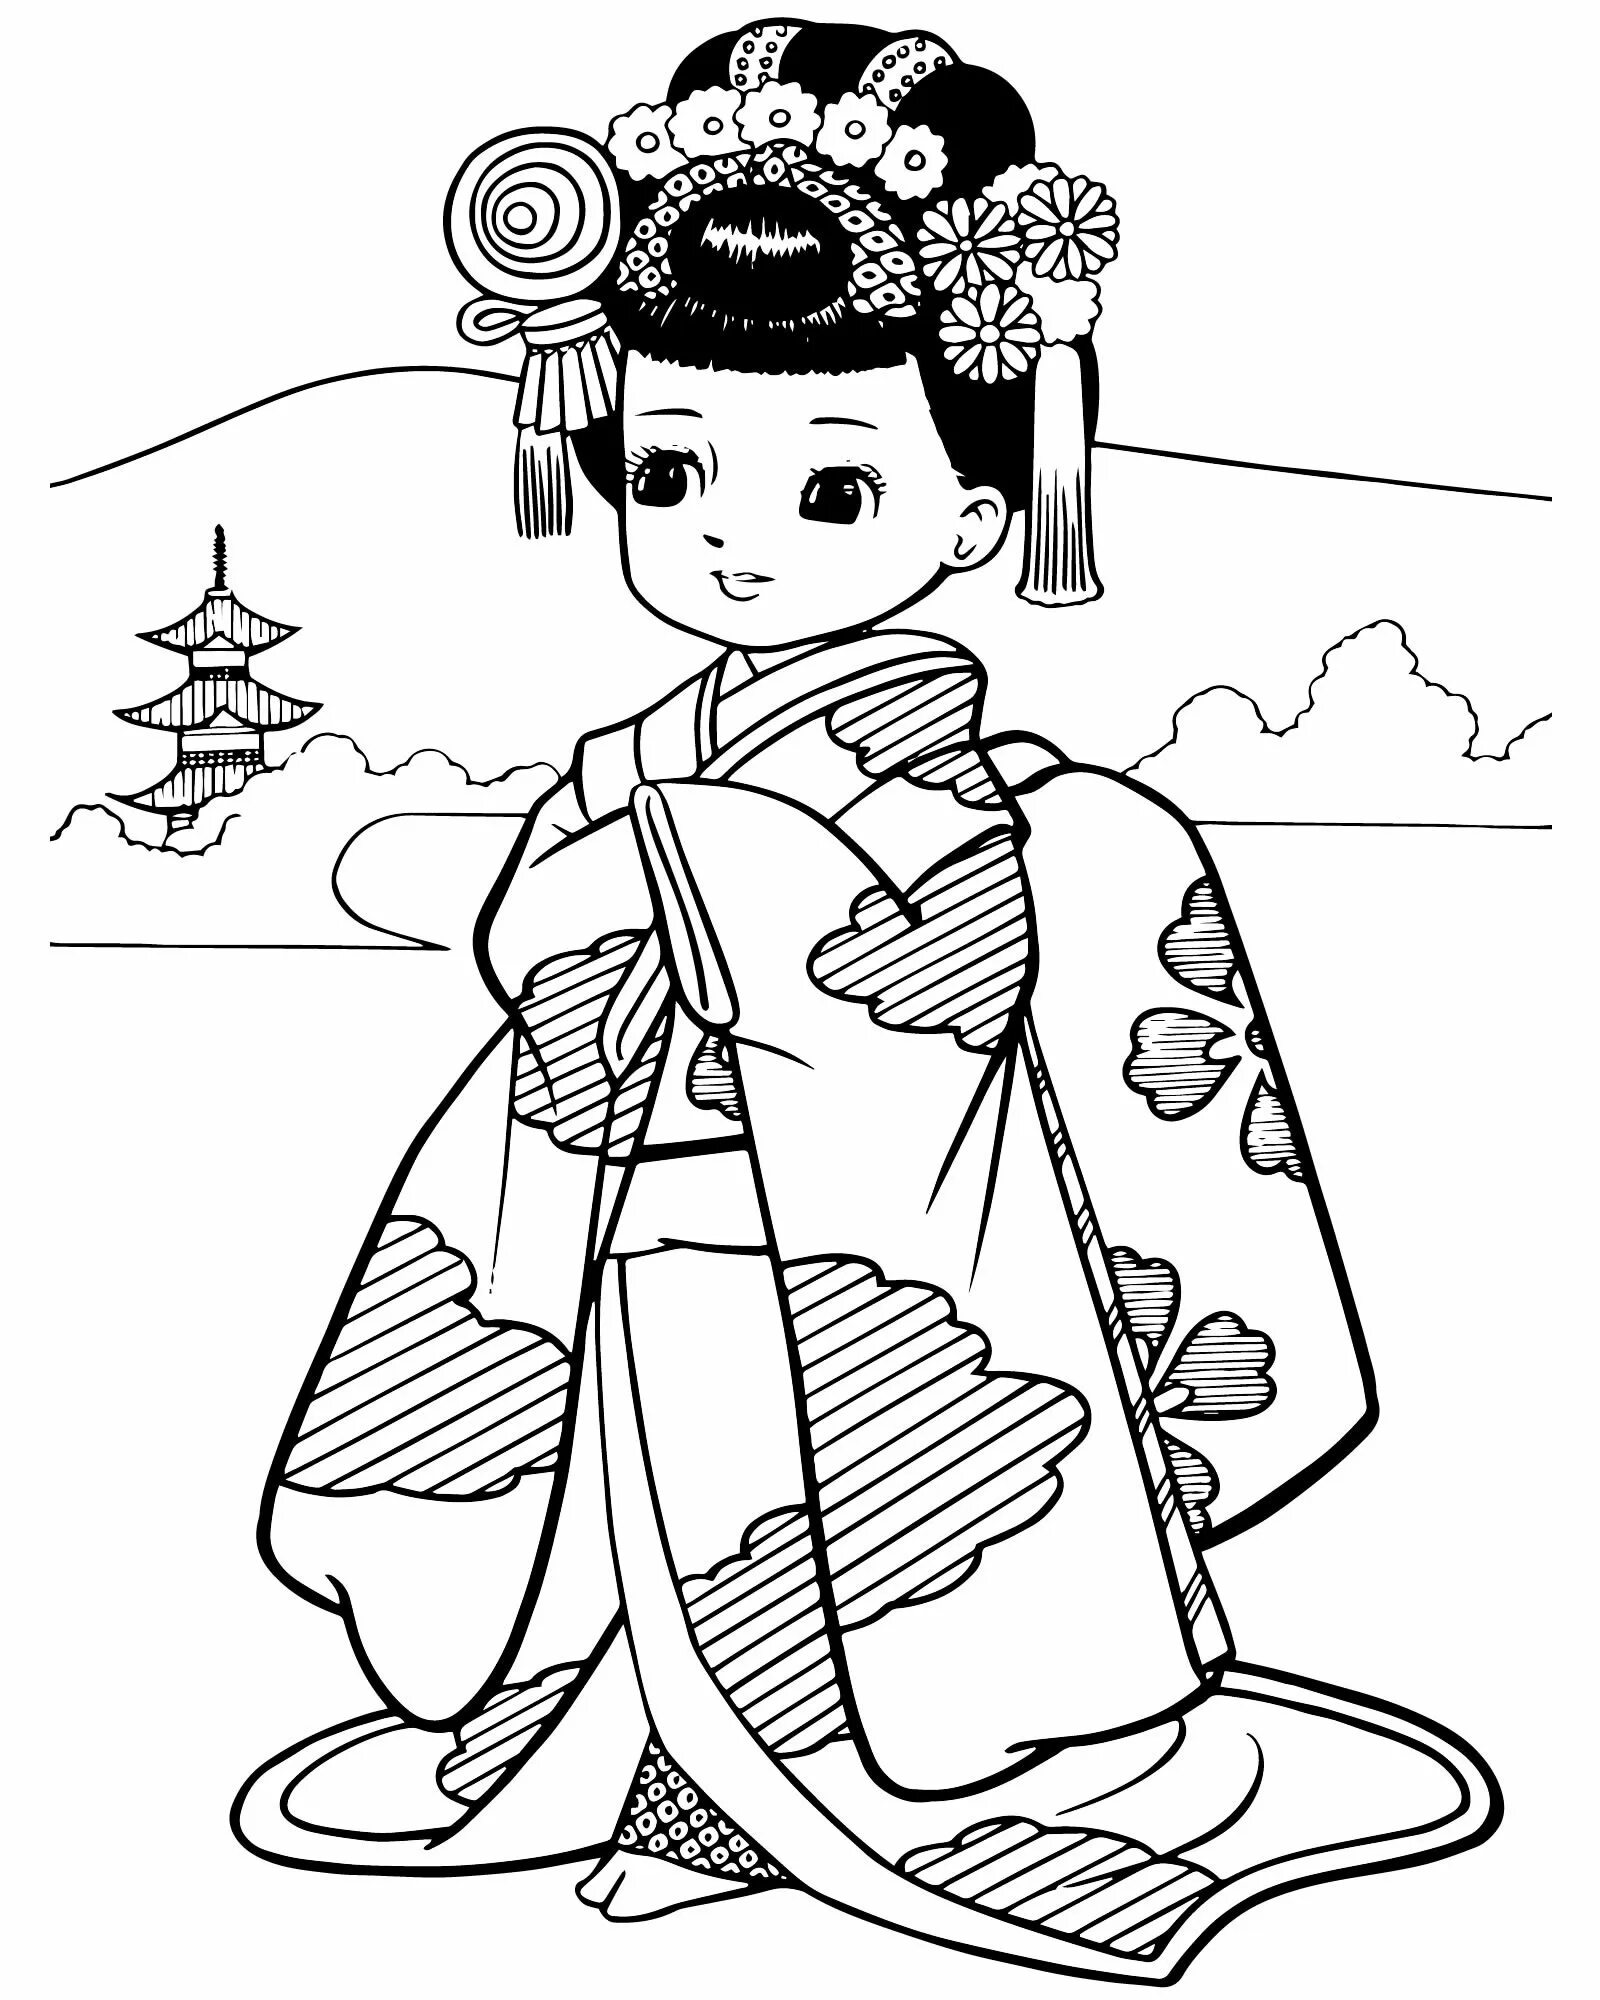 Adorable kimono coloring book for kids